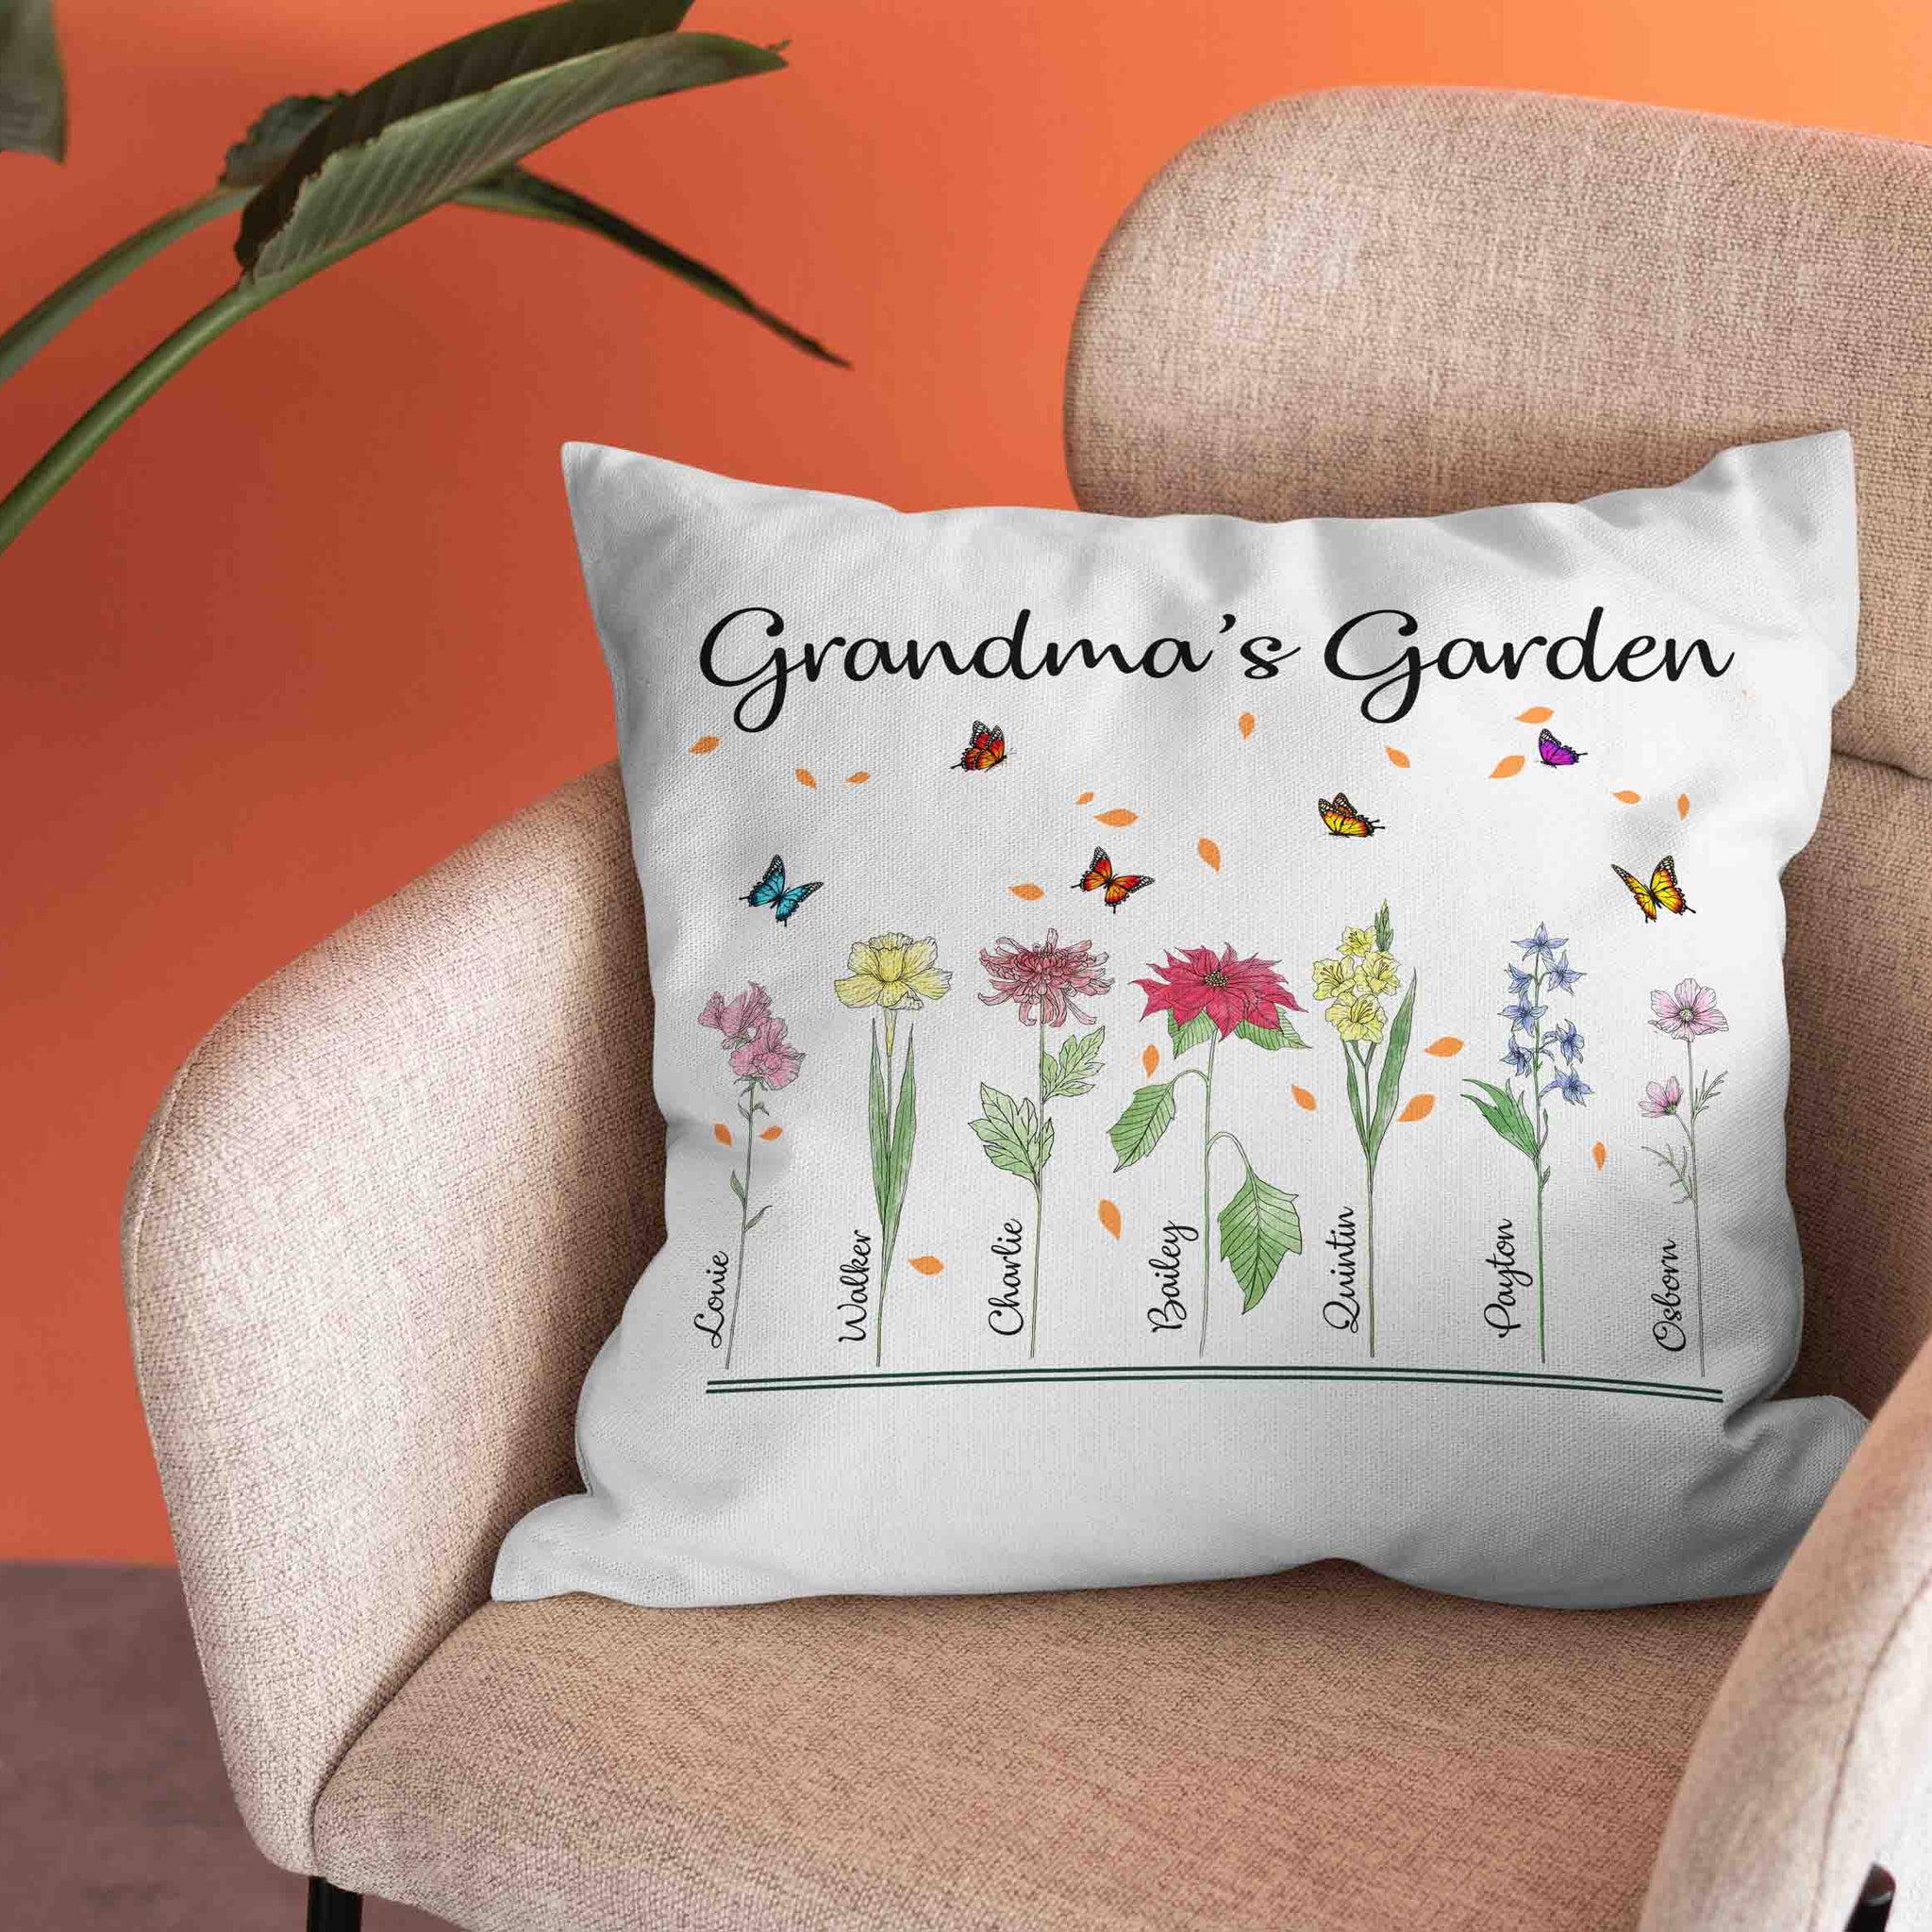 Grandma's Garden Pillow, Personalized Birth Flowers Pillow, Gift Ideas For Grandma, Birth Month Flower Pillow Design, Custom Name Pillow, Grandma Gift, Pillow for Gifts